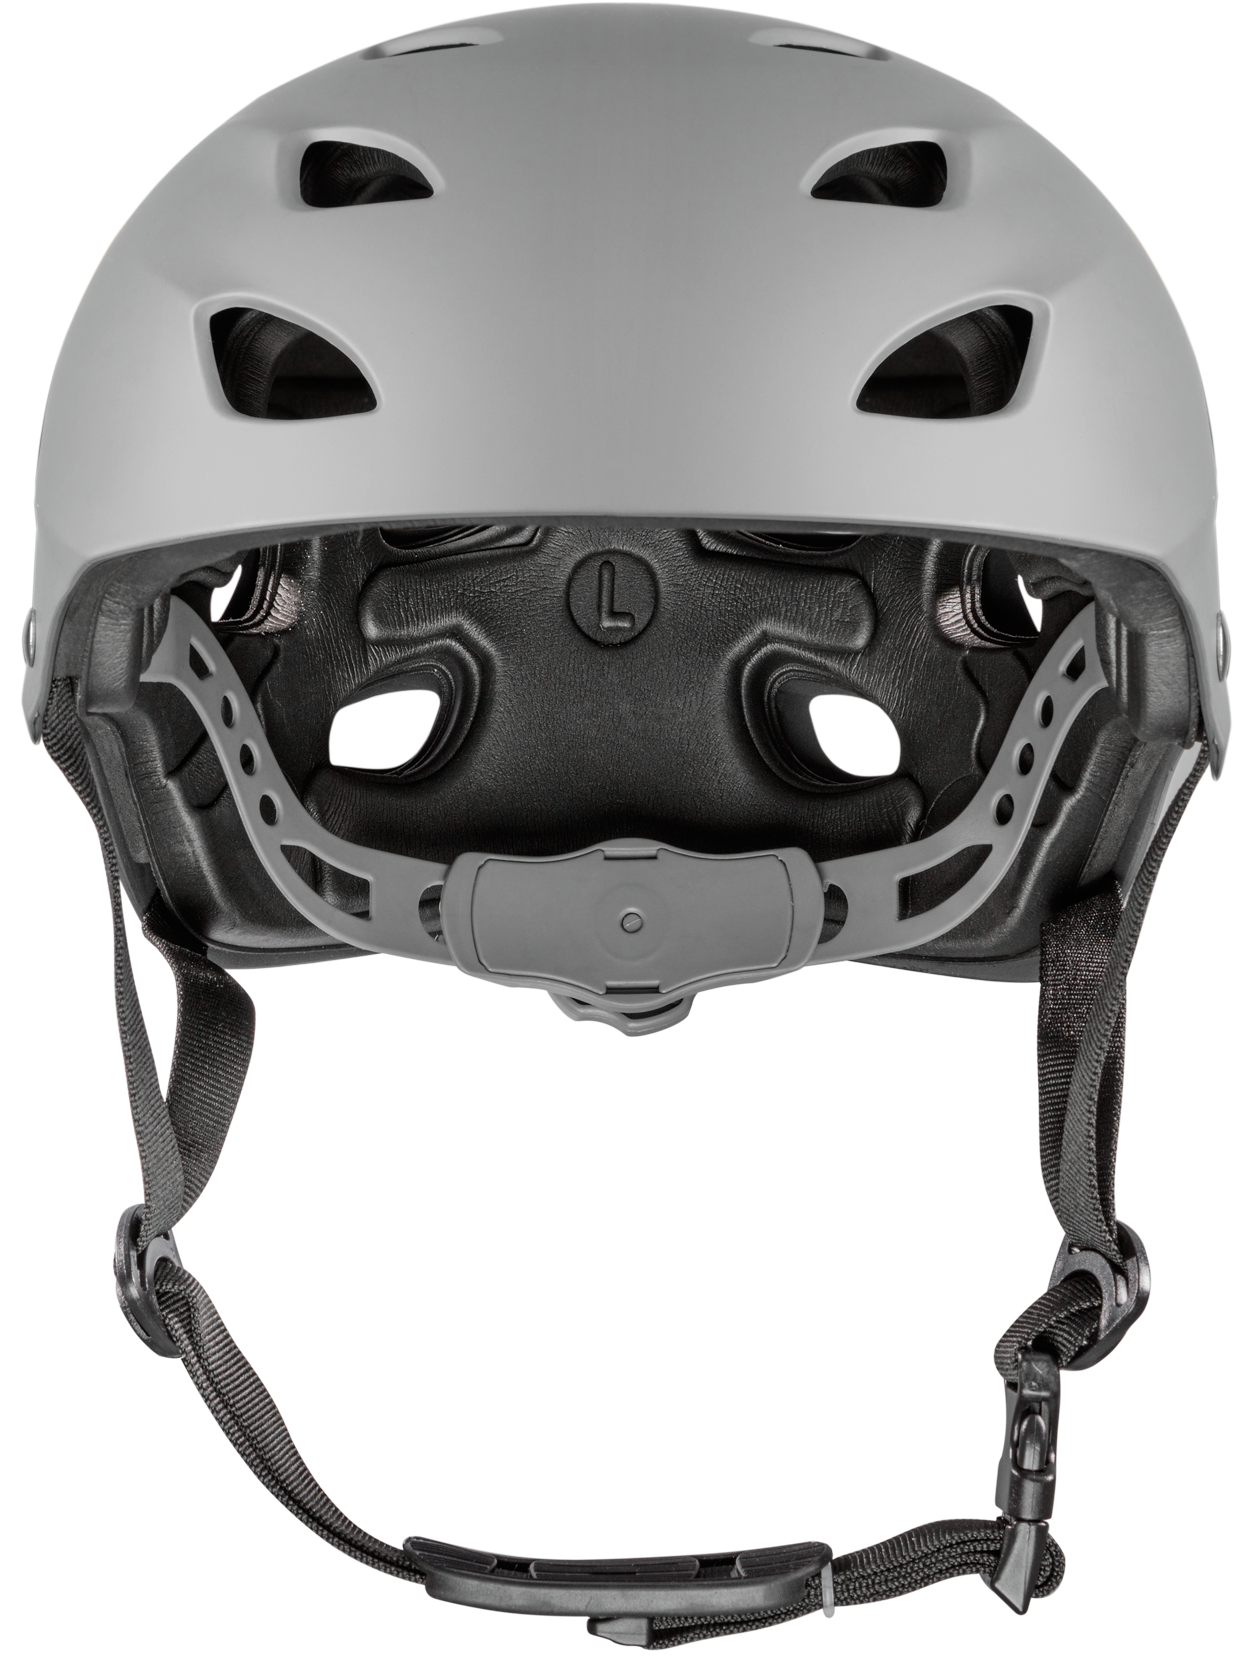 Front View of Gray Off Roading Helmet